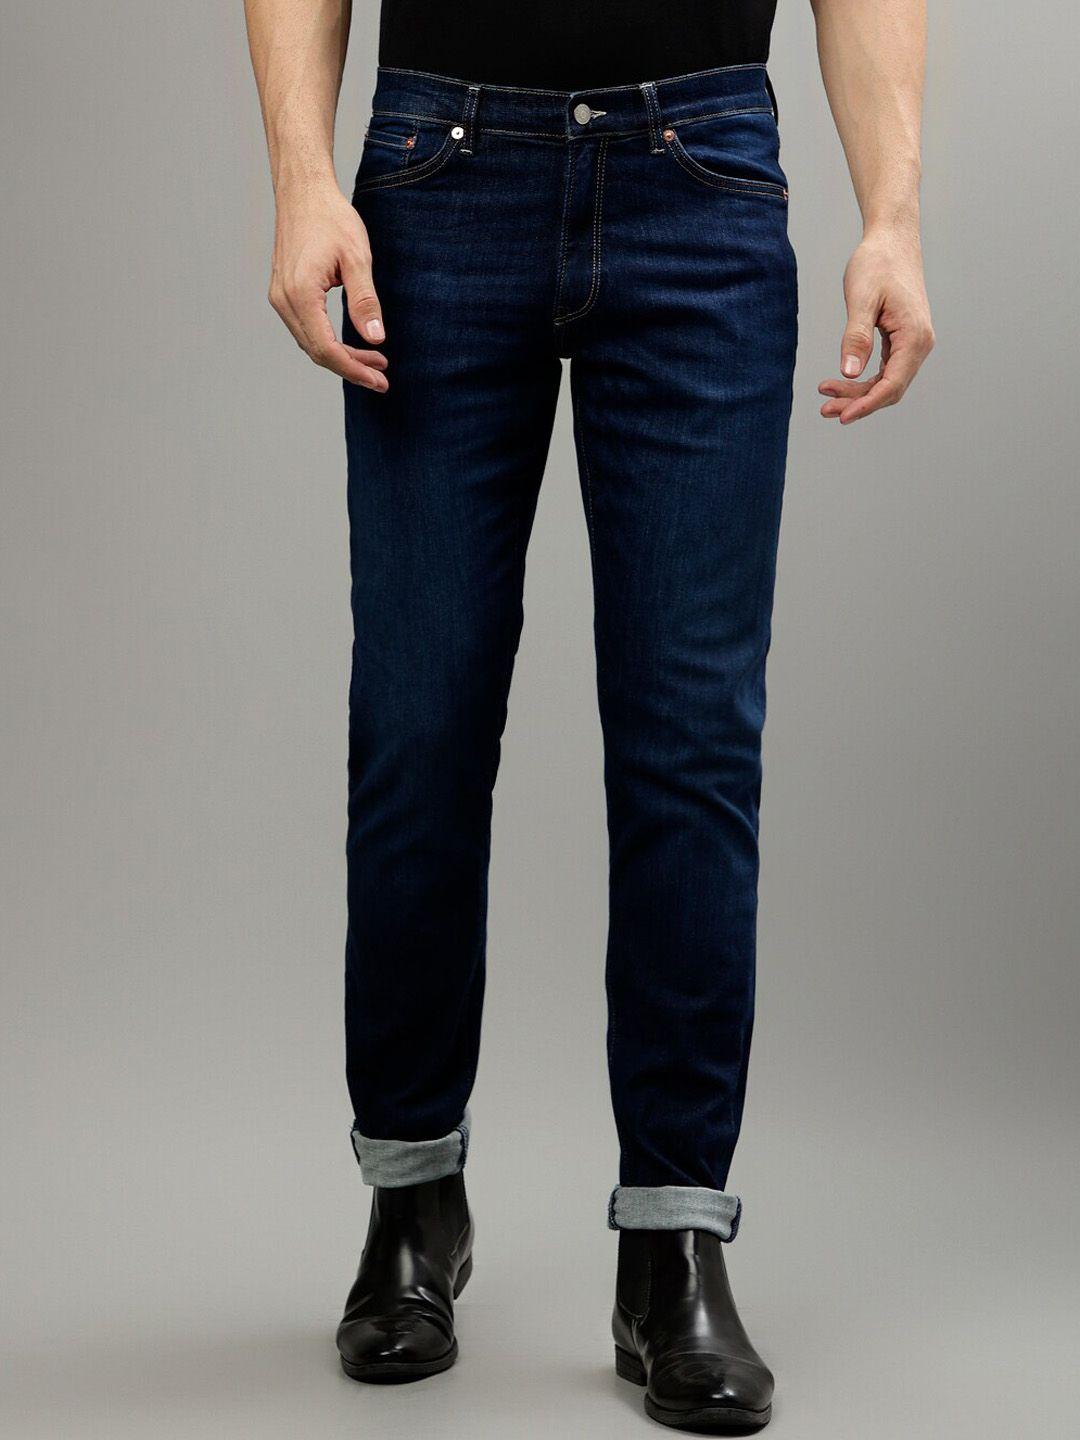 gant-men-slim-fit-light-fade-clean-look-stretchable-jeans